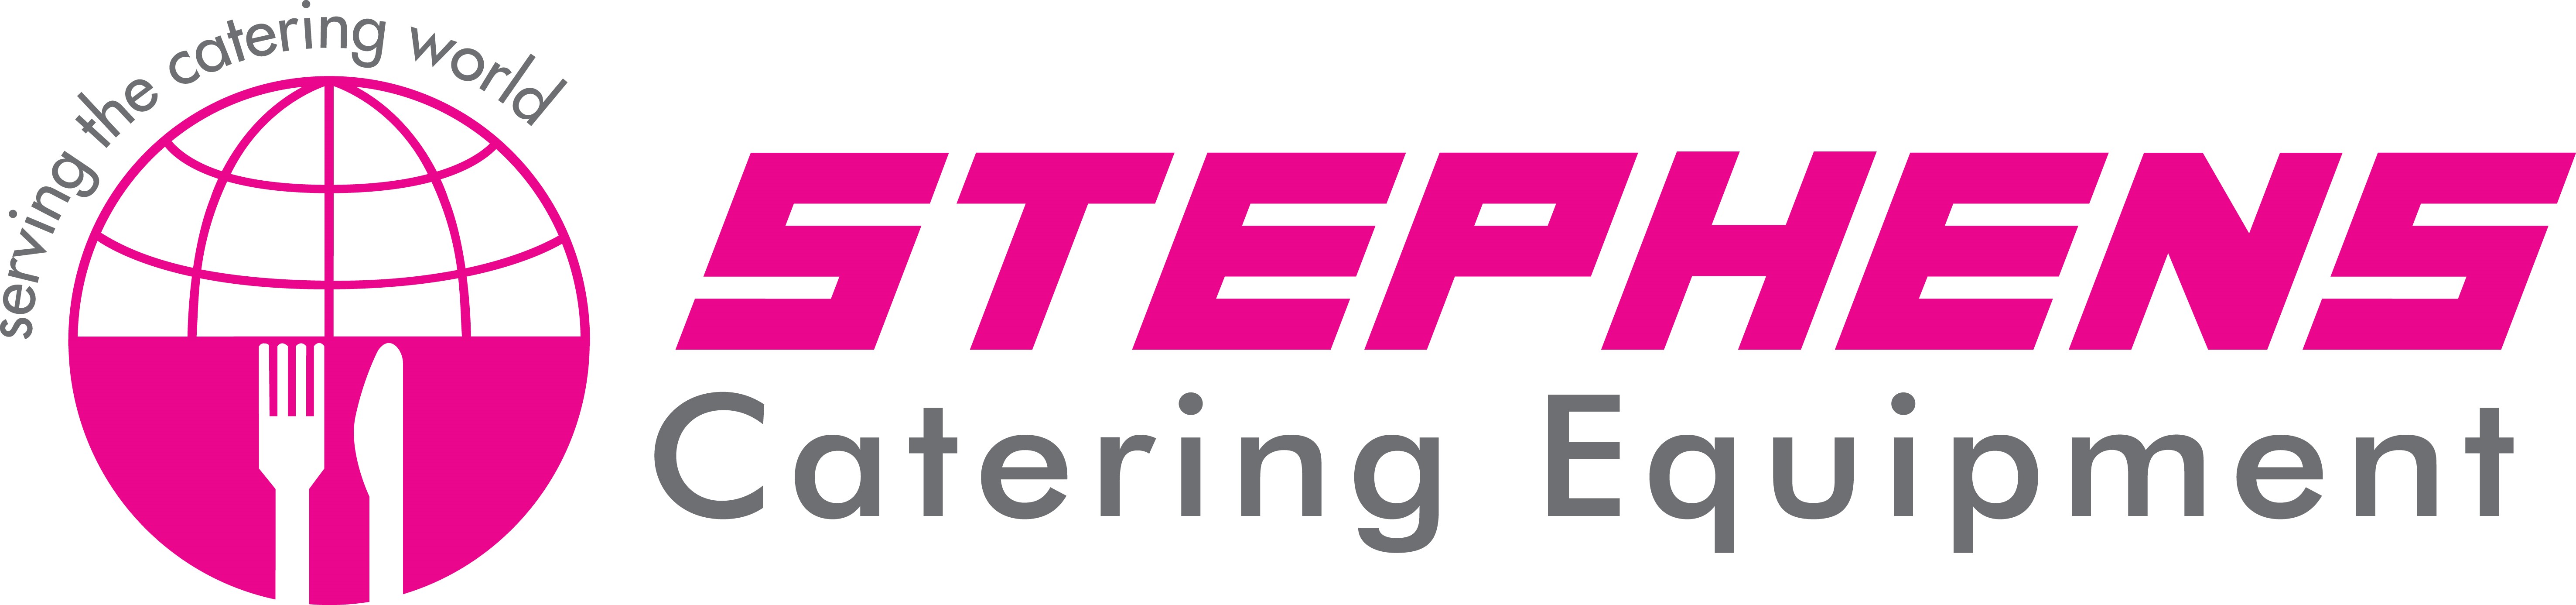 Stephens Catering Equipment Co Ltd image.